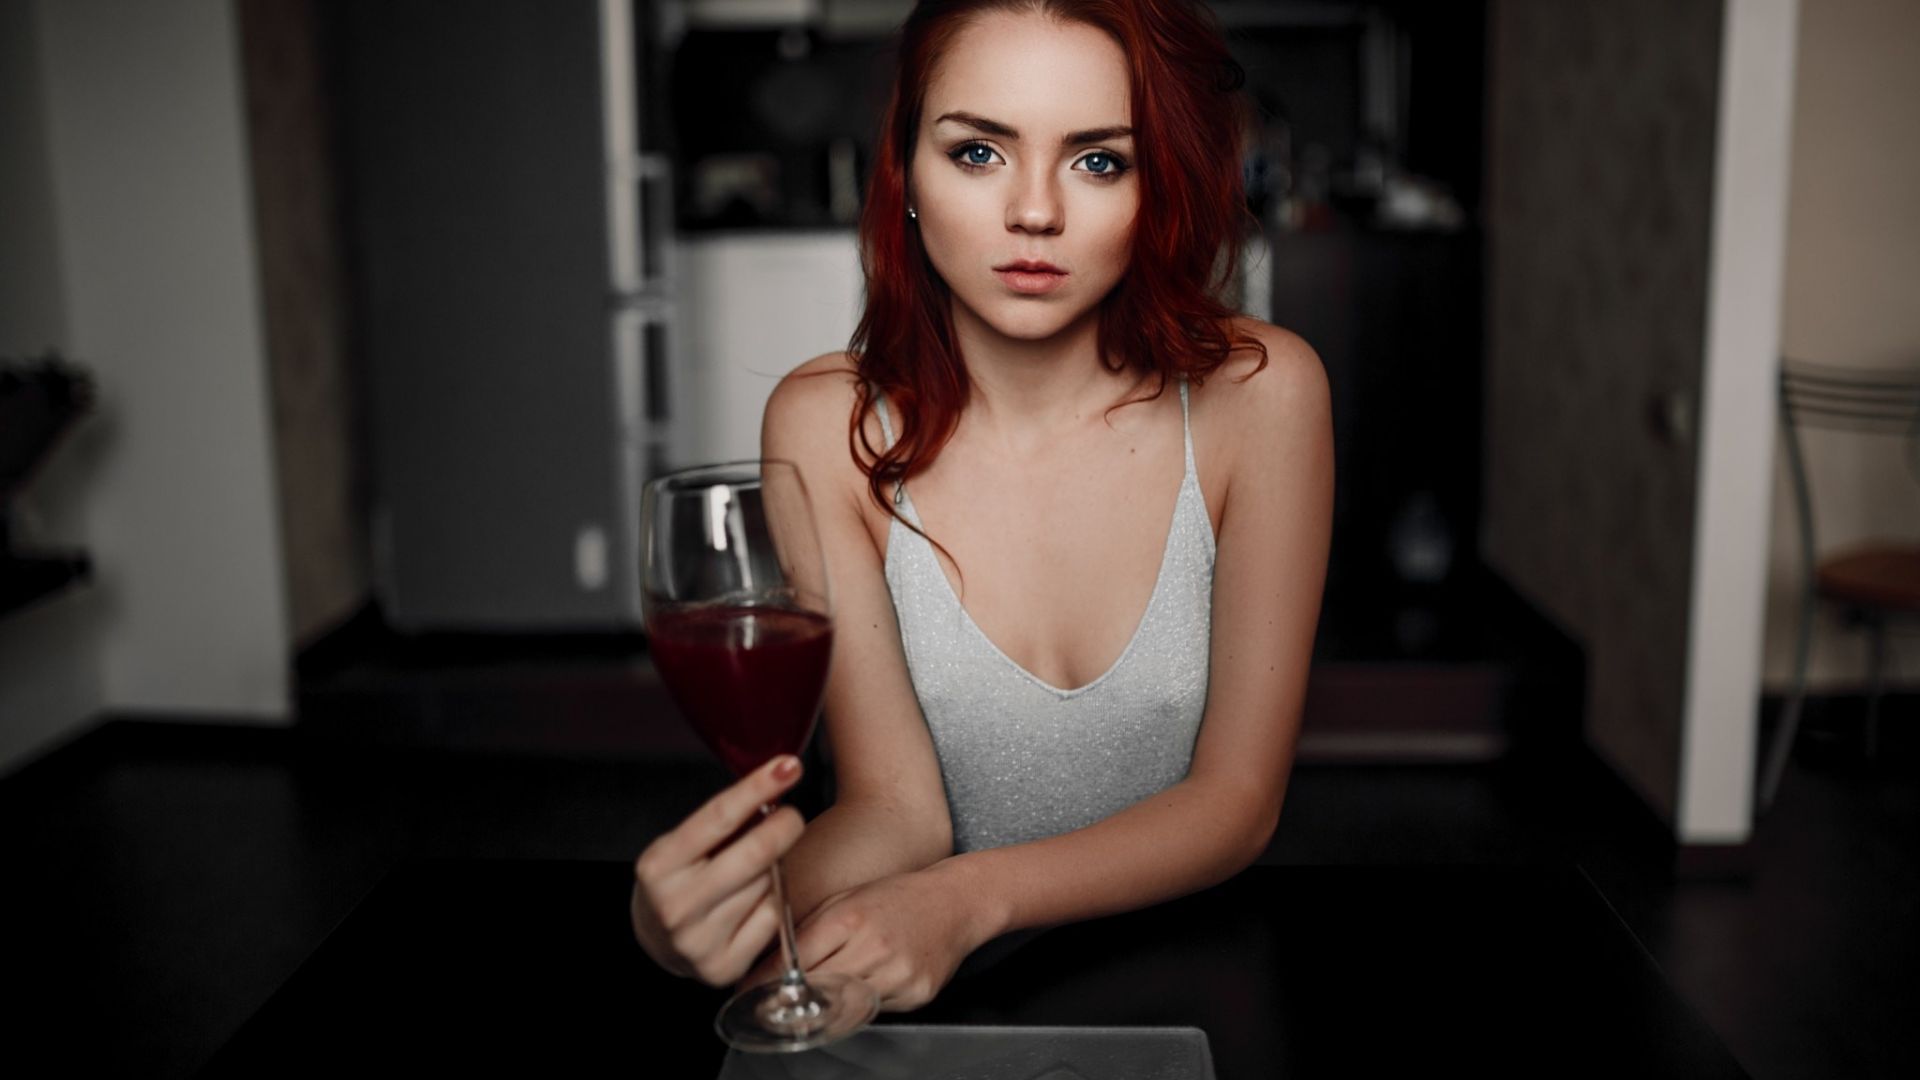 Wallpaper Karoline Kate, red head, model, wine glass